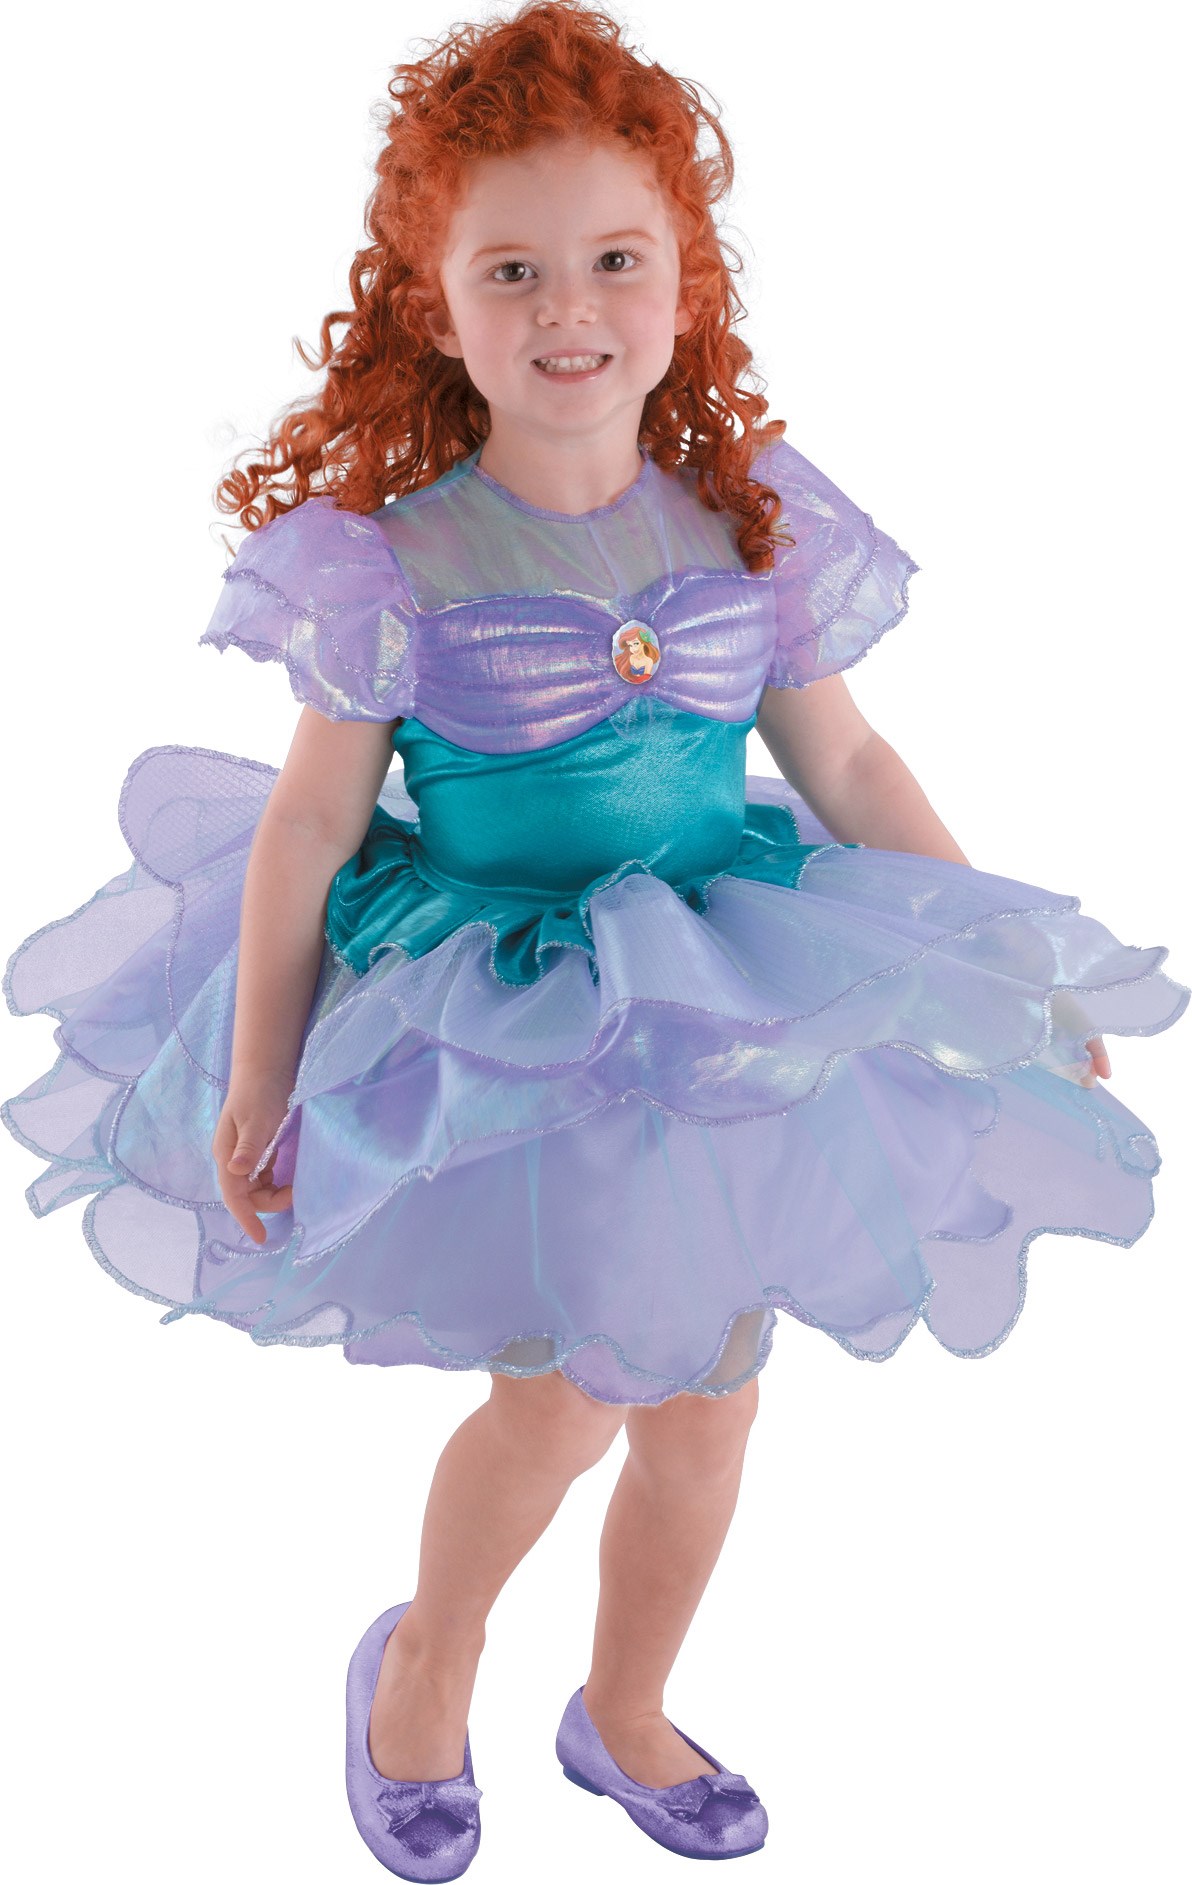 The Little Mermaid Ariel Ballerina Toddler / Child Costume